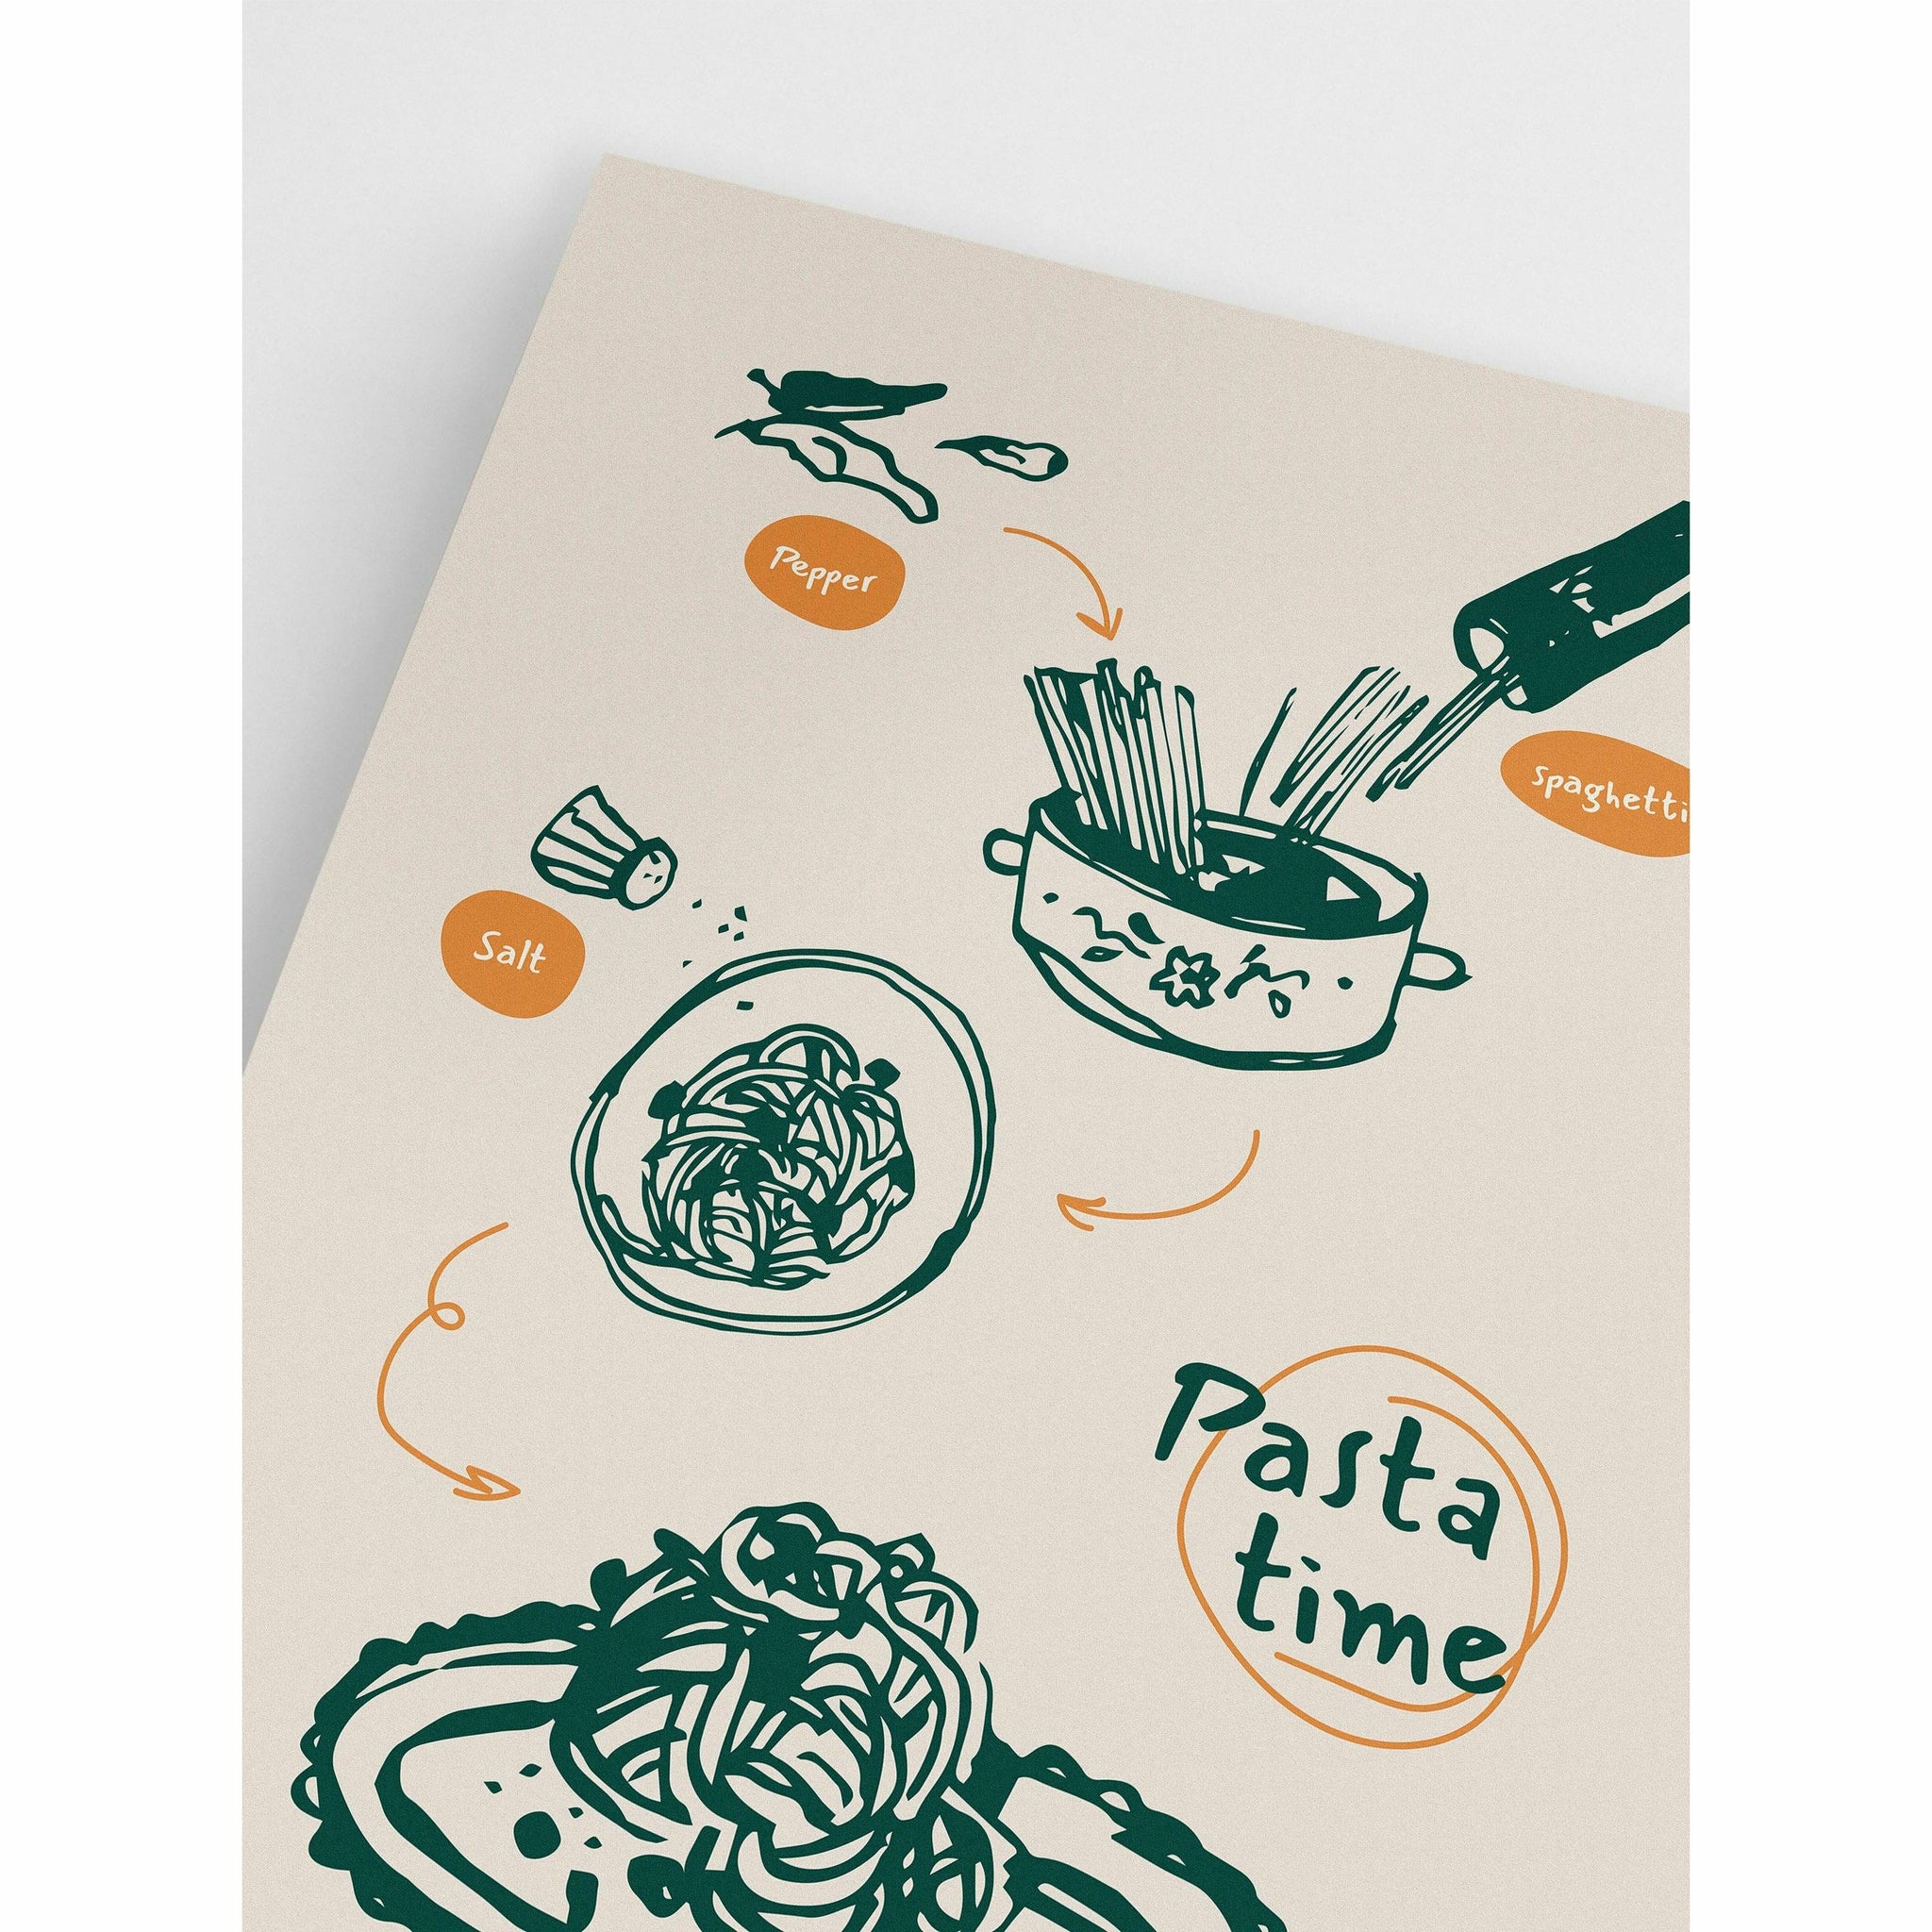 Pasta Time Poster